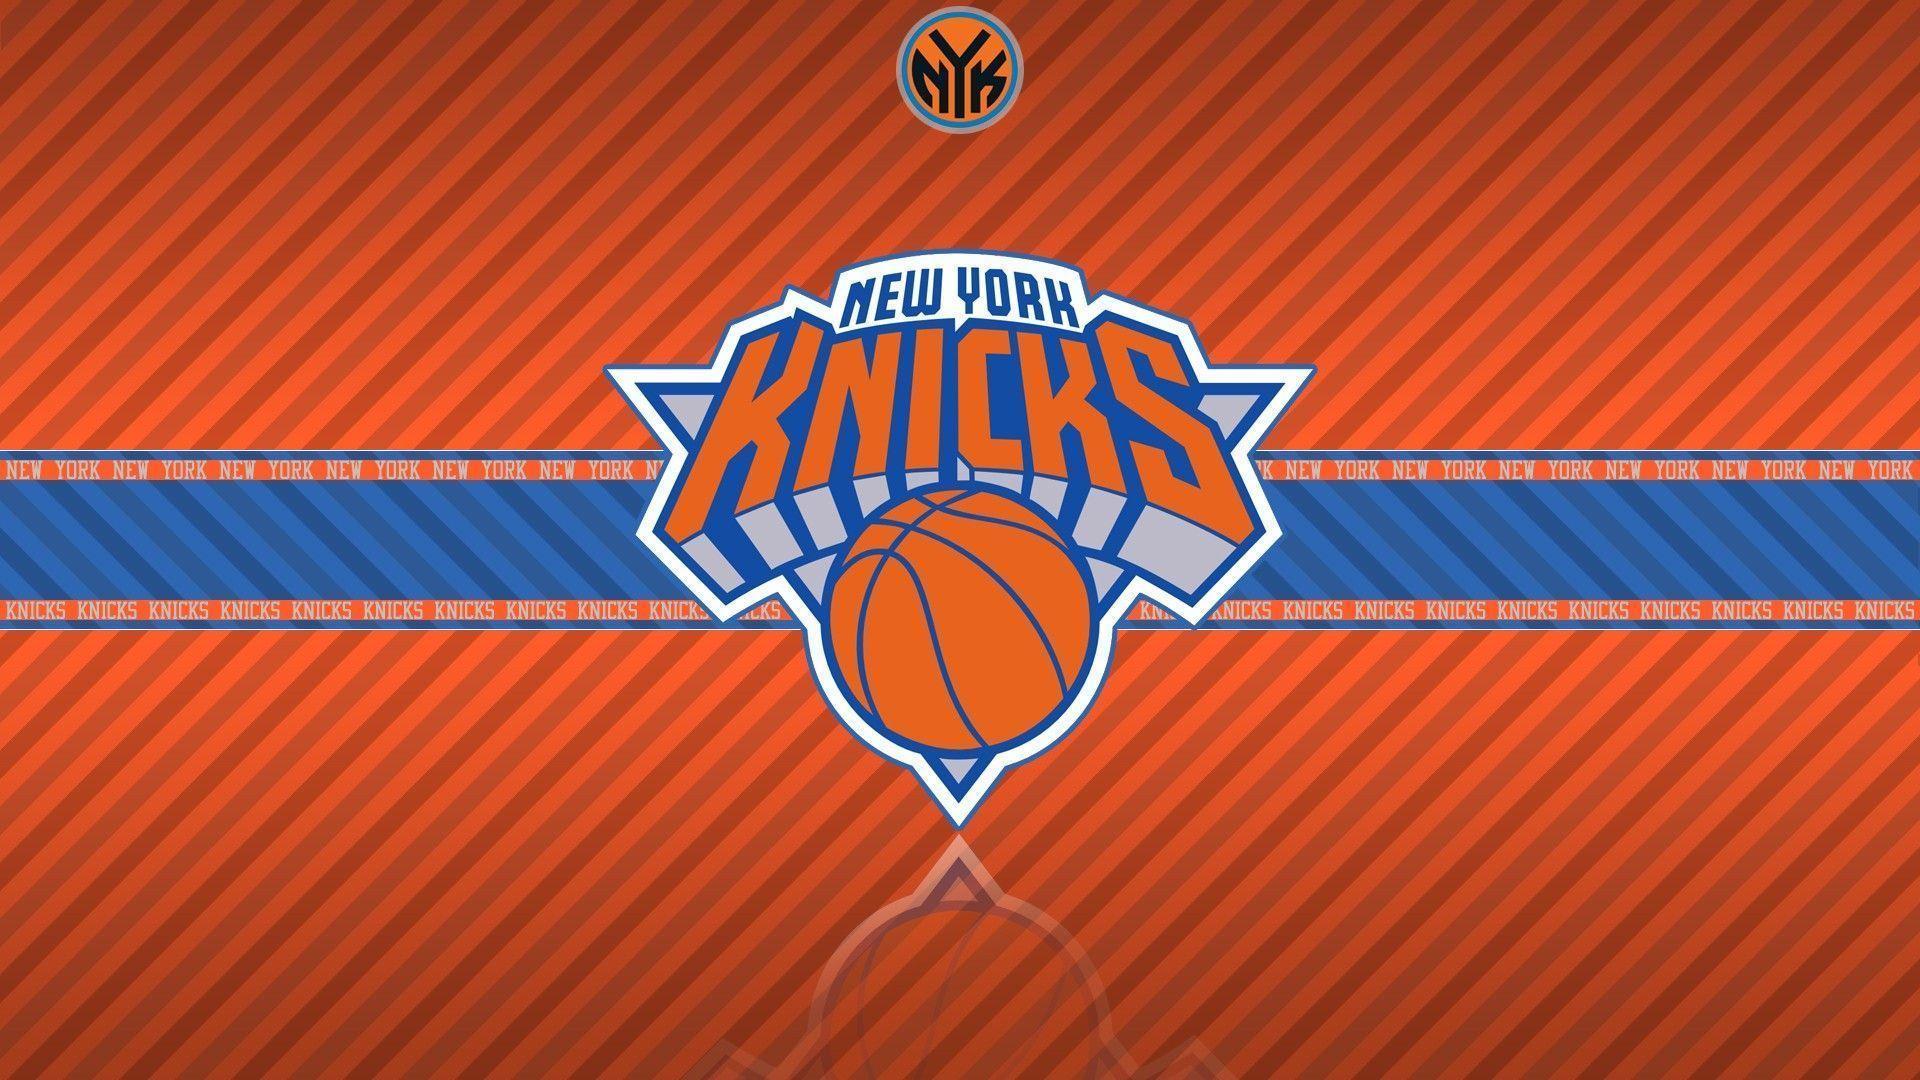 Wallpaper Of New York Knicks In Orange Background Paperpull